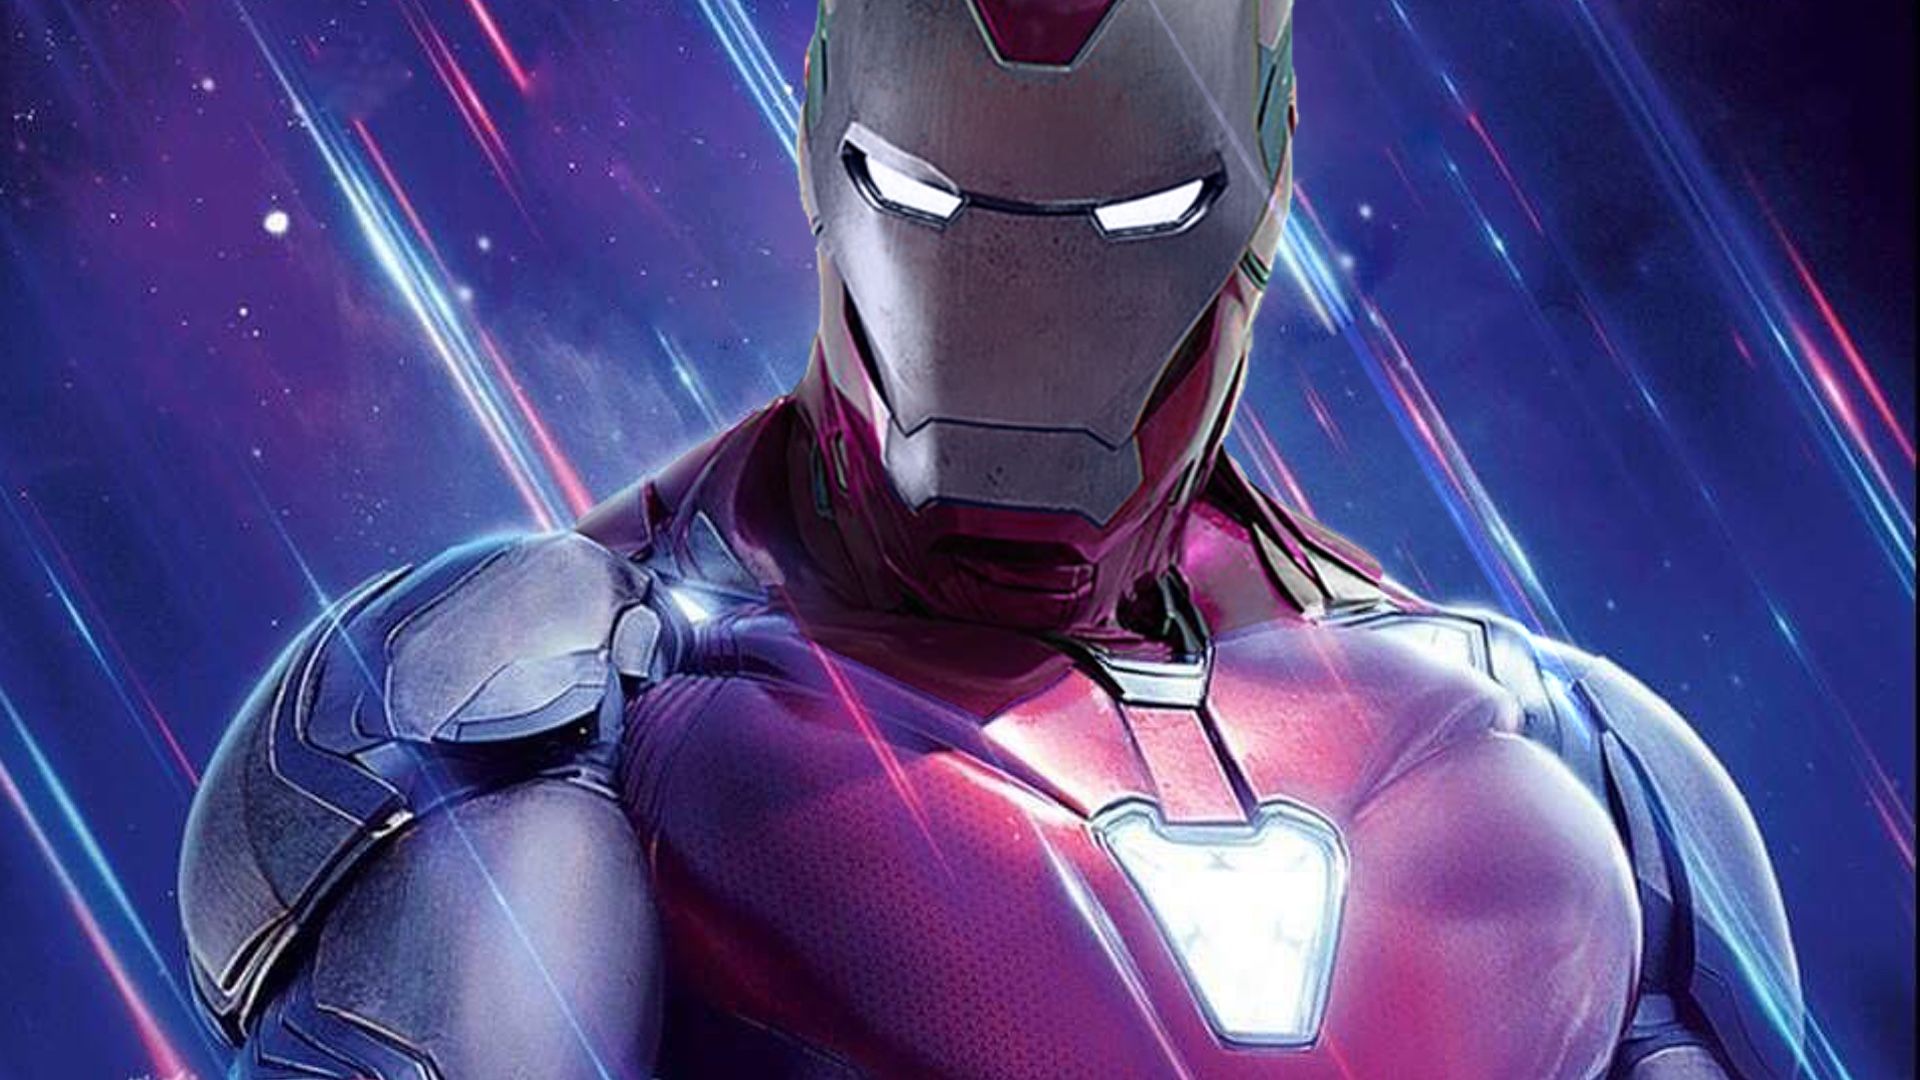 Download Avengers Endgame Iron Man Full HD Wallpaper